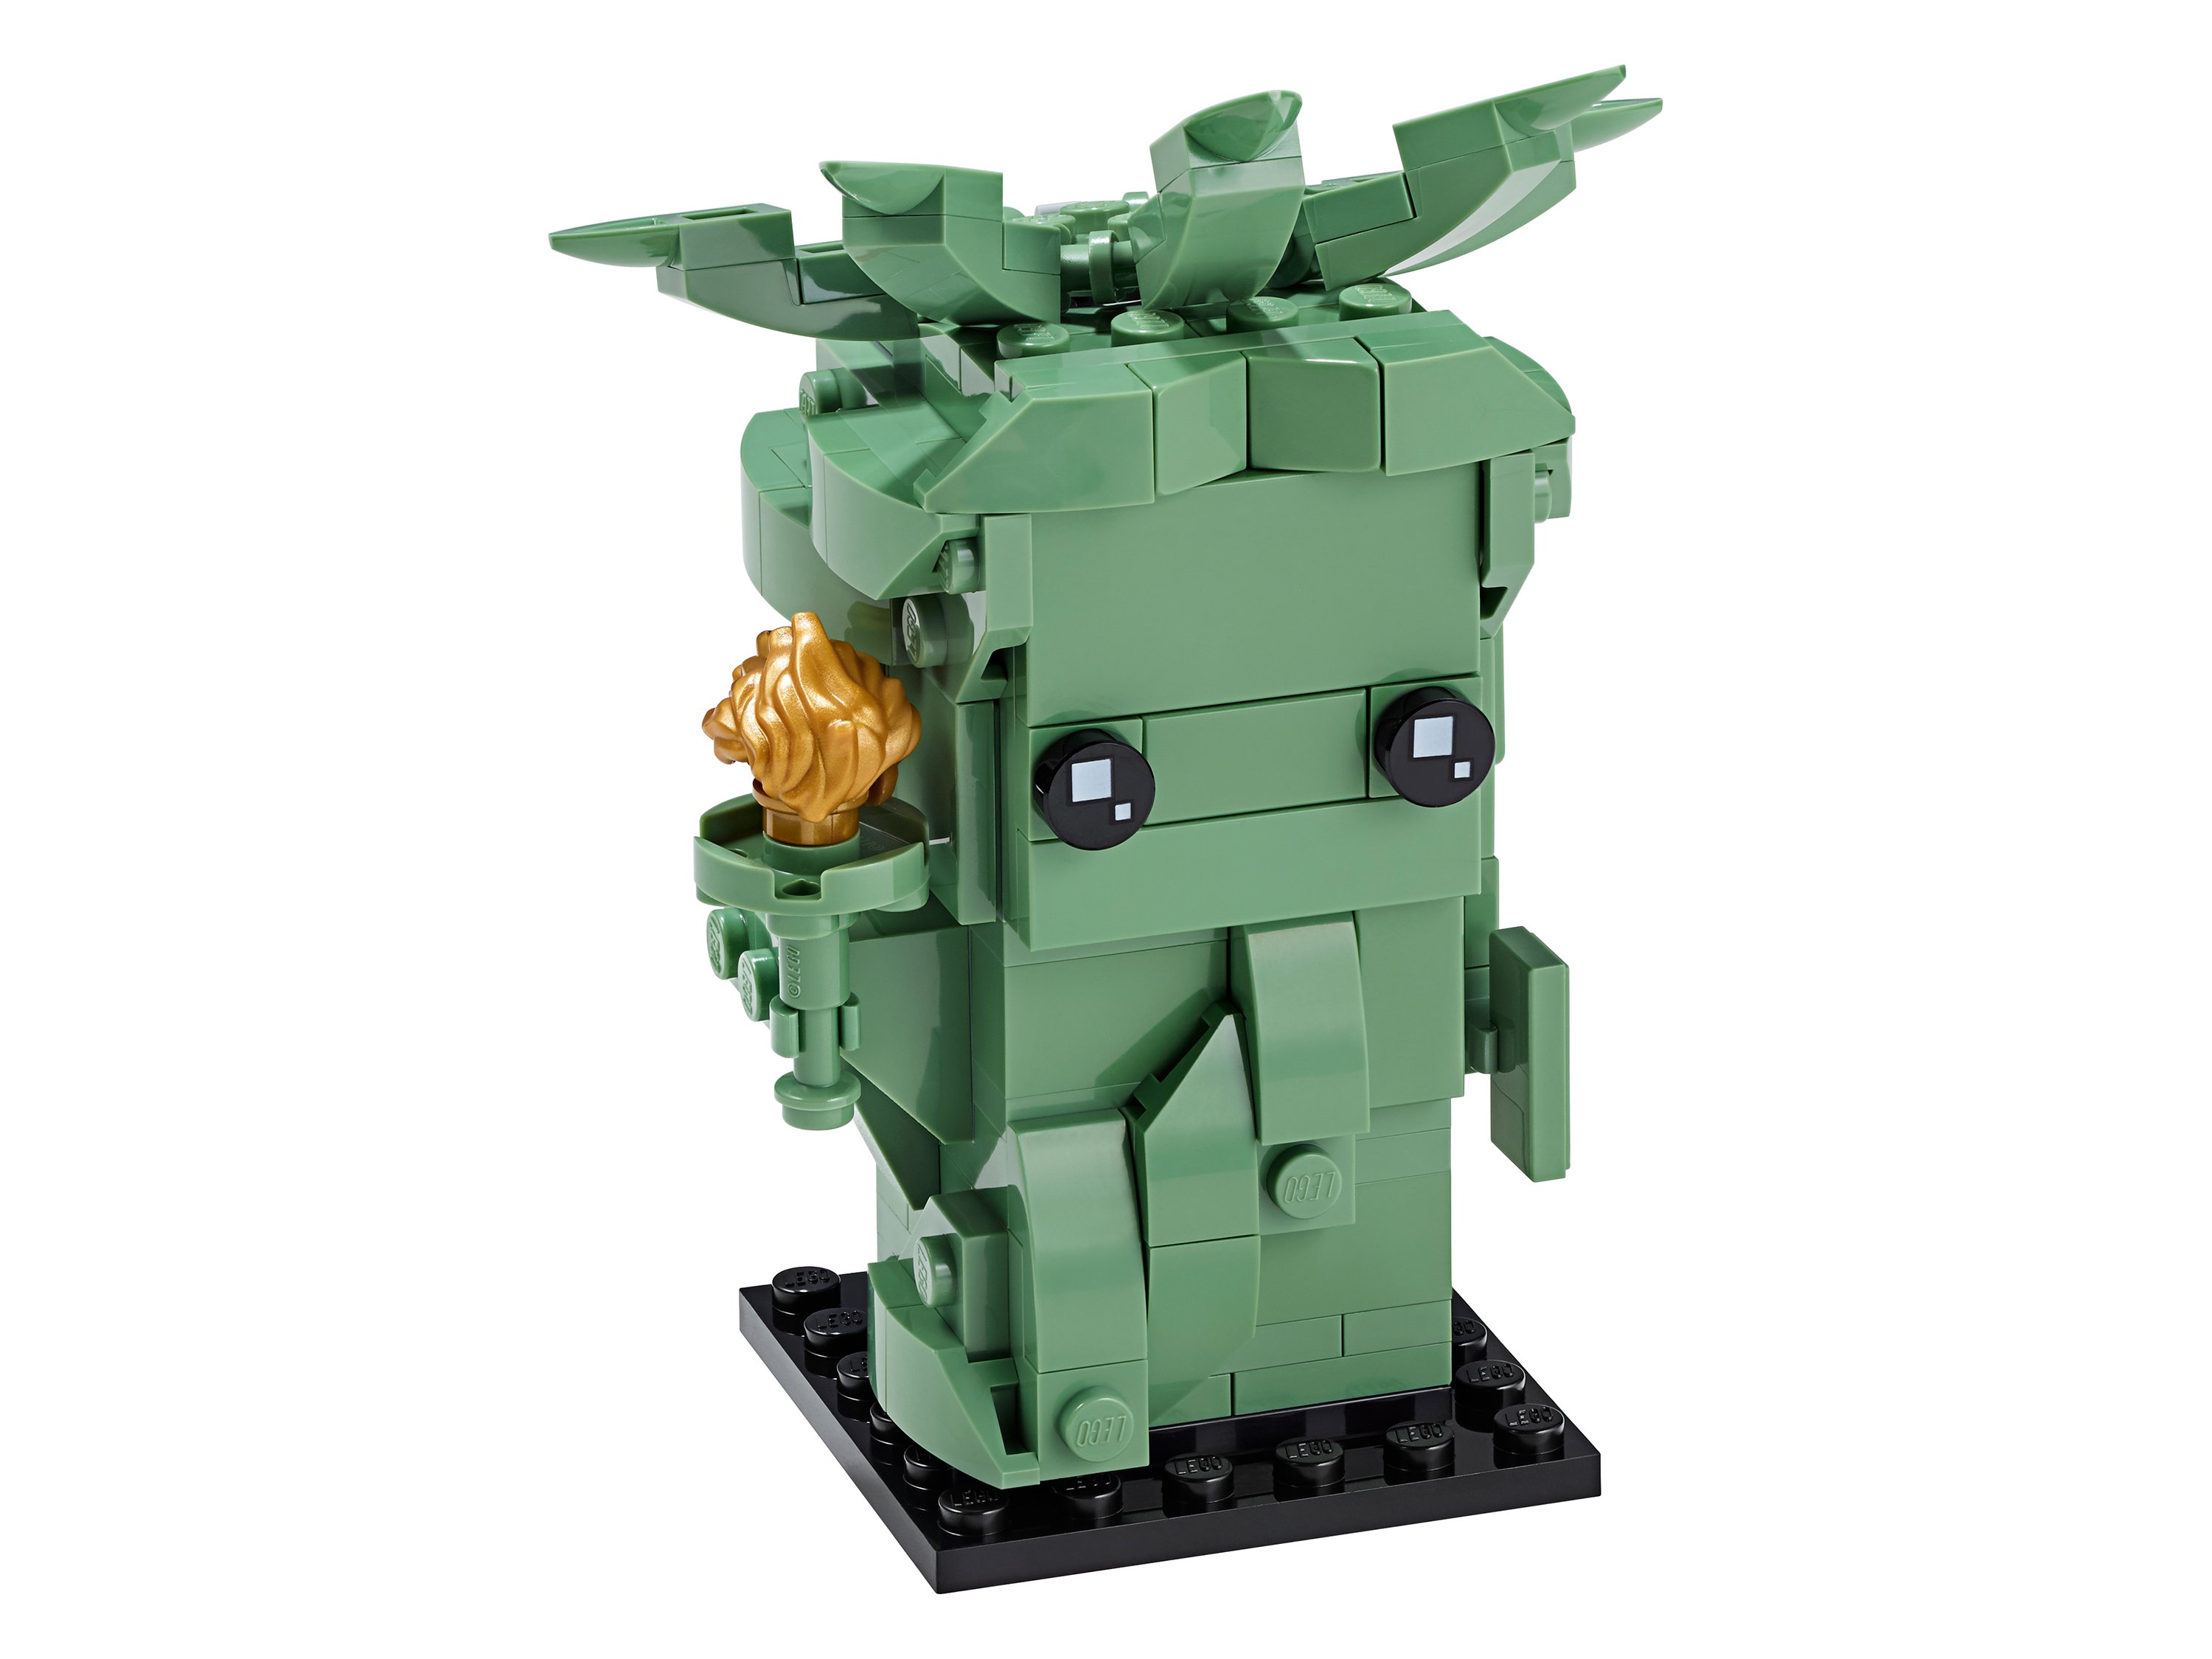 Lego BrickHeadz 40367 Статуя Свободы